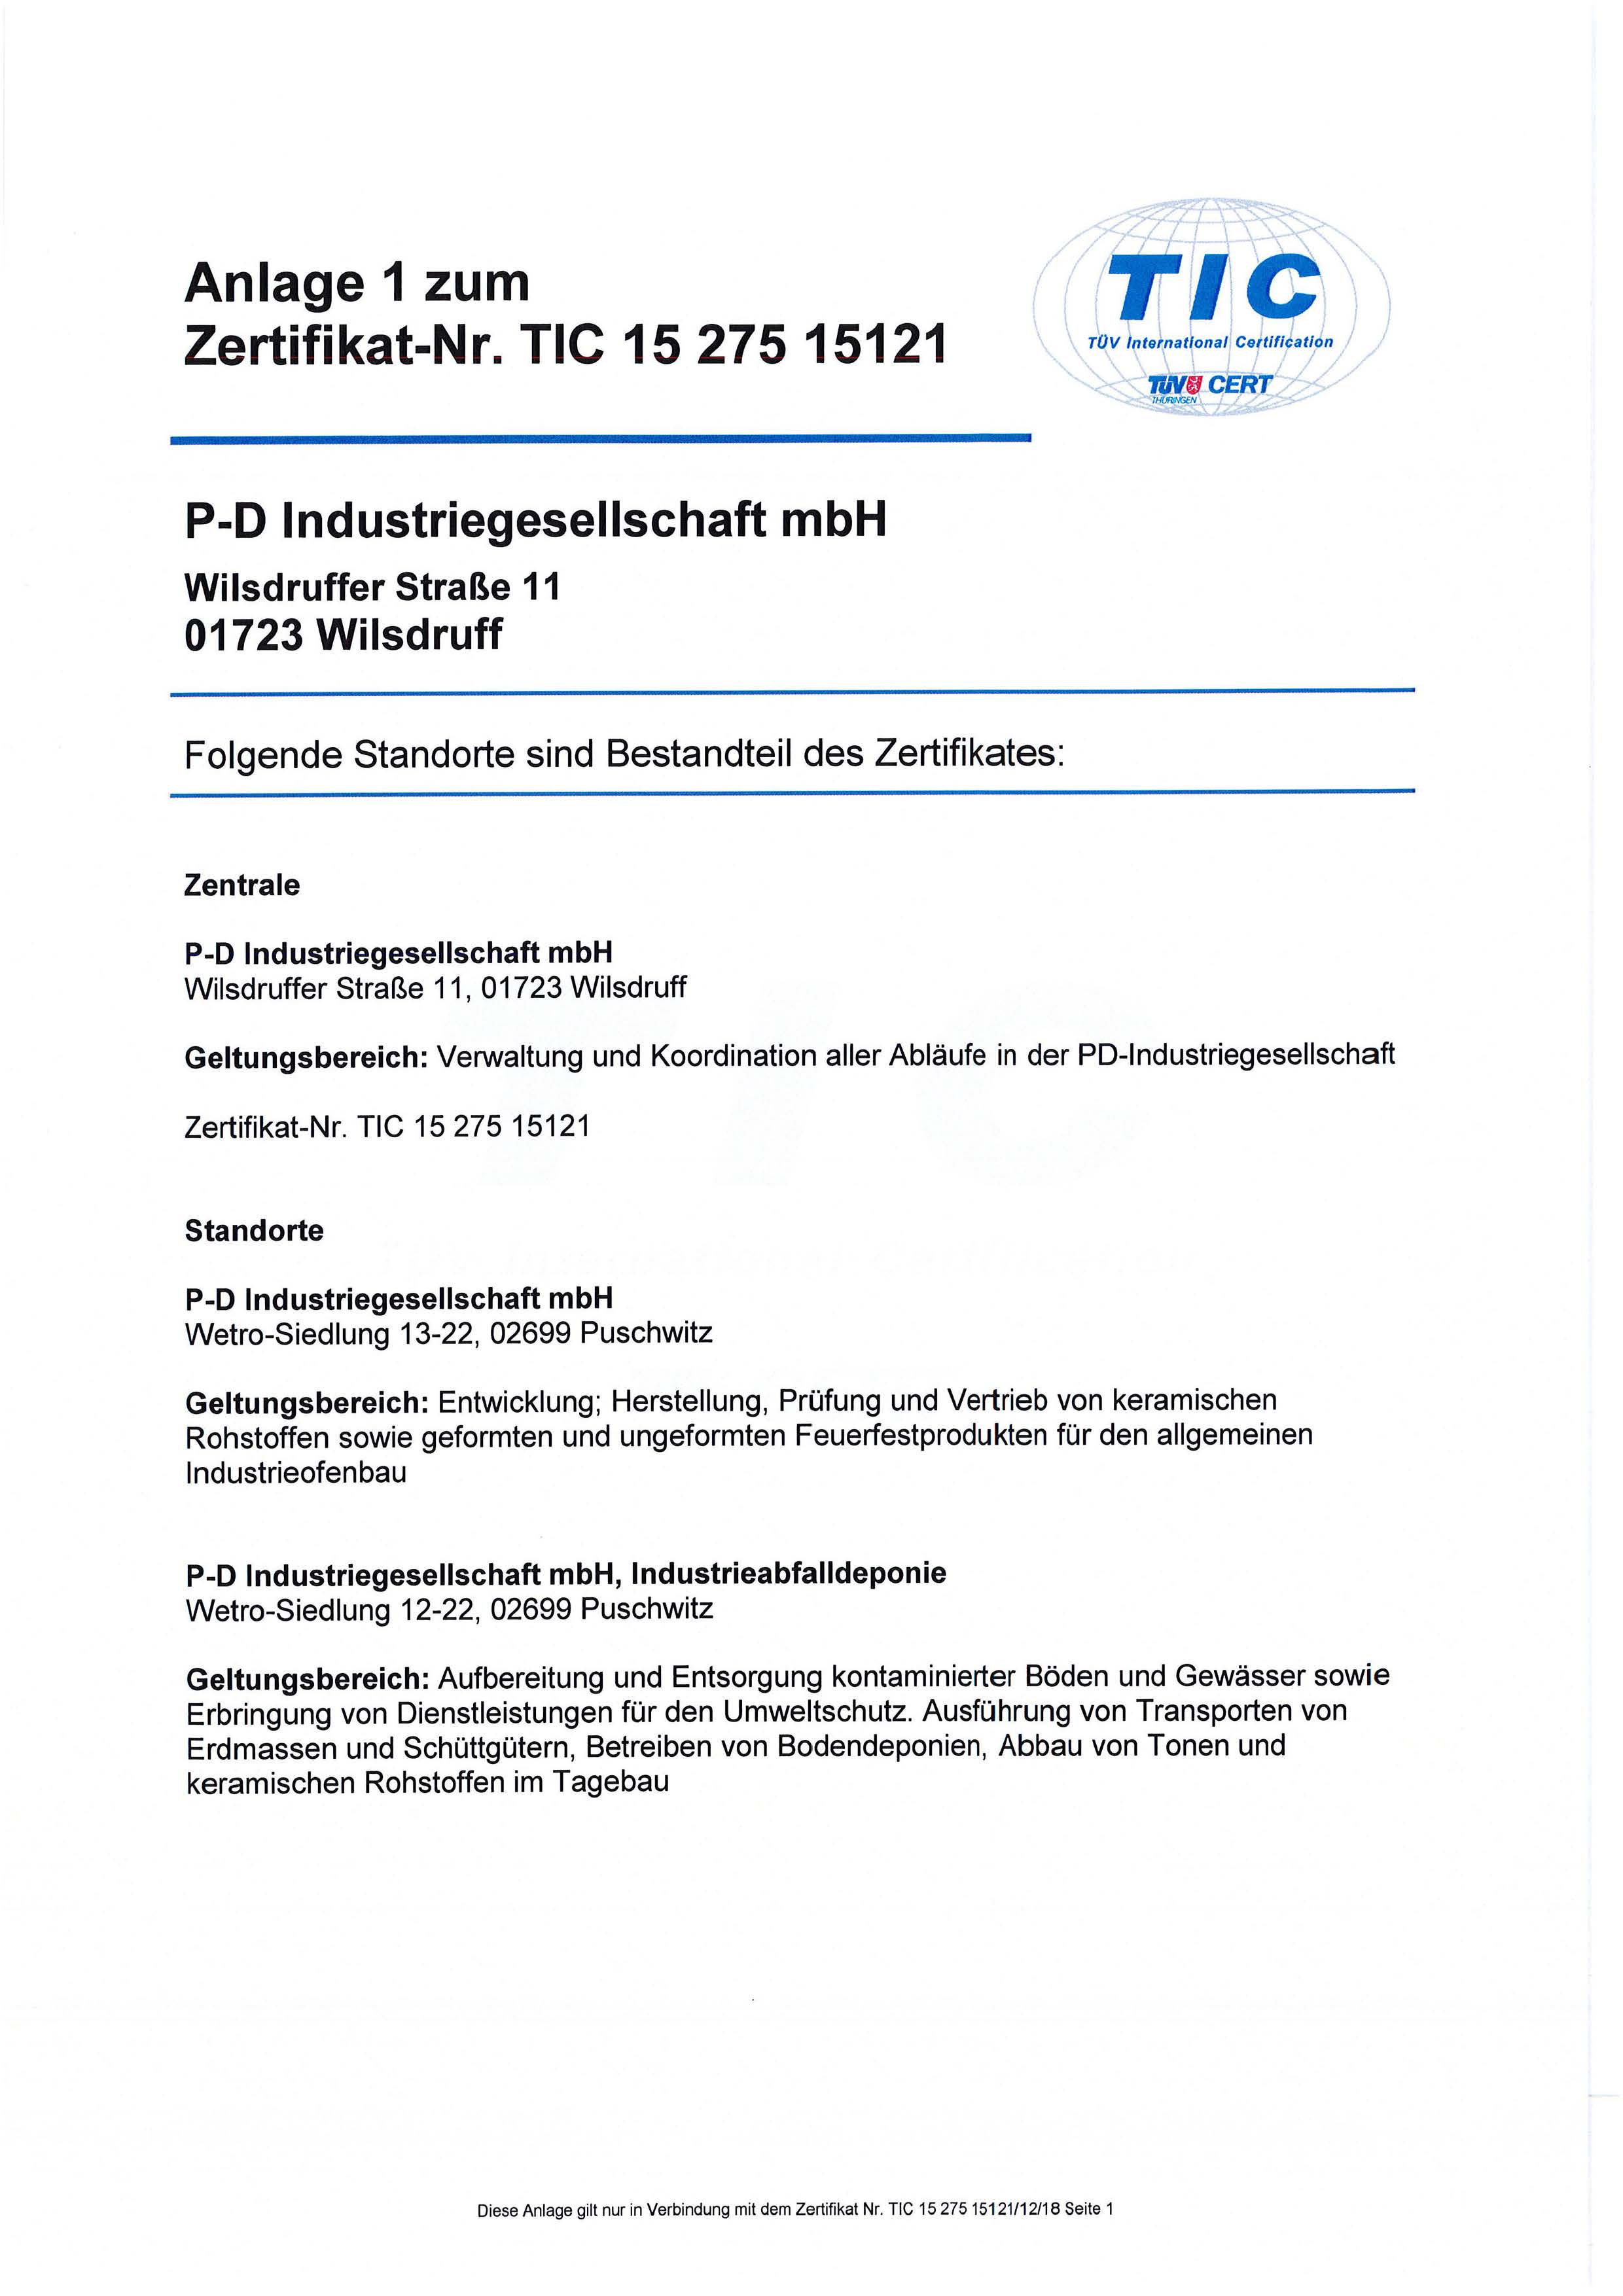 P-D Industriegesellschaft mbH · DIN EN ISO 50001:2011 (Anlage)